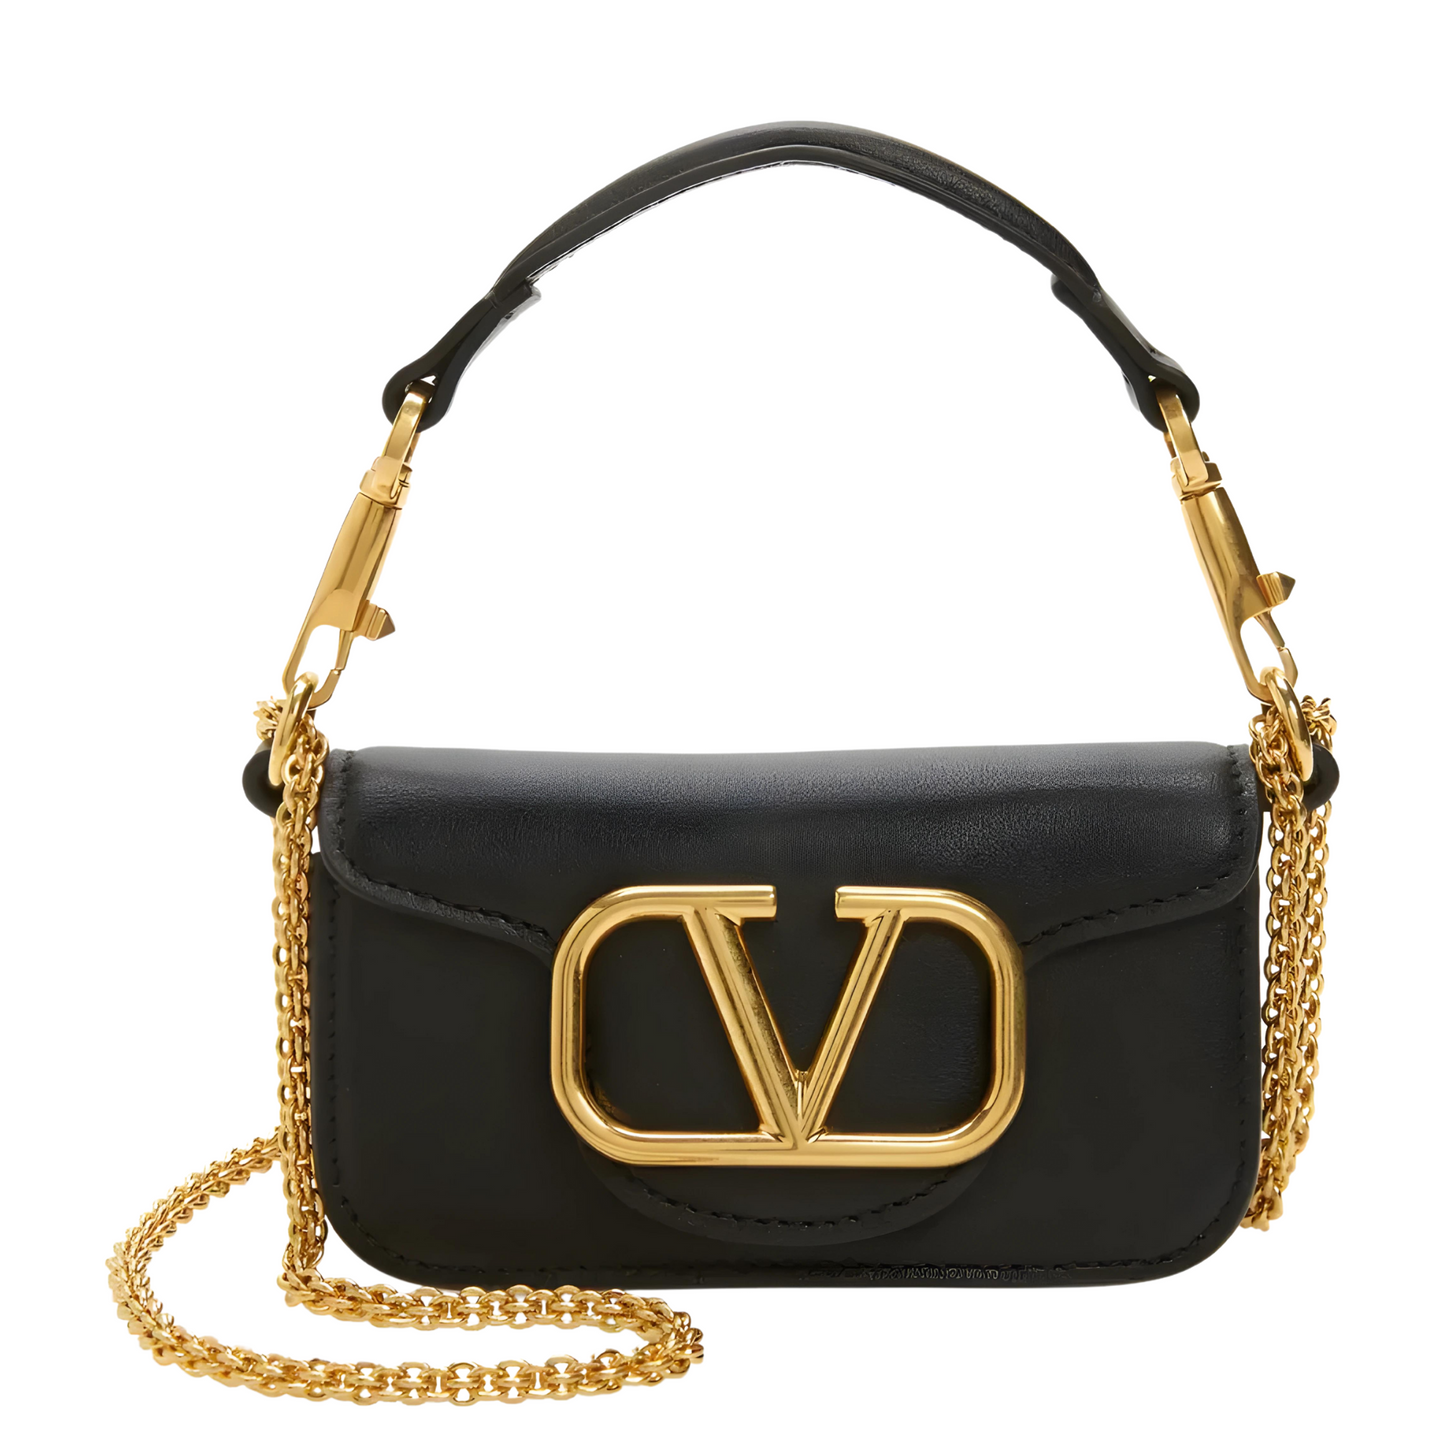 Valentino Garavani - Timeless Elegance: Discover the Luxurious V LOGO Crossbody Bag